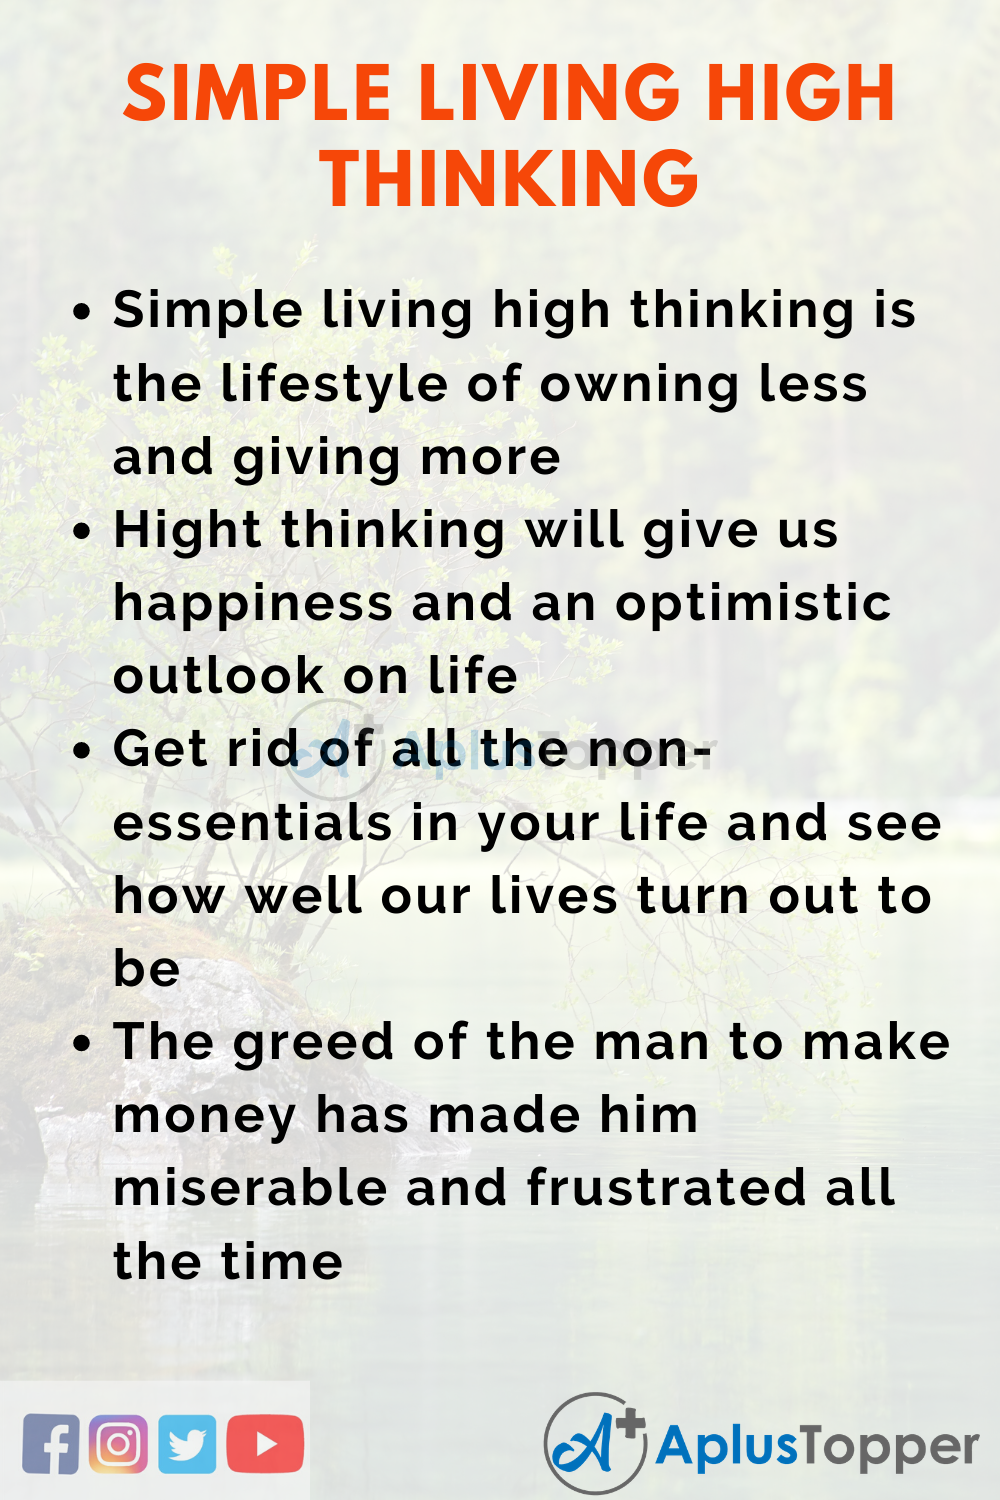 speech on simple living high thinking